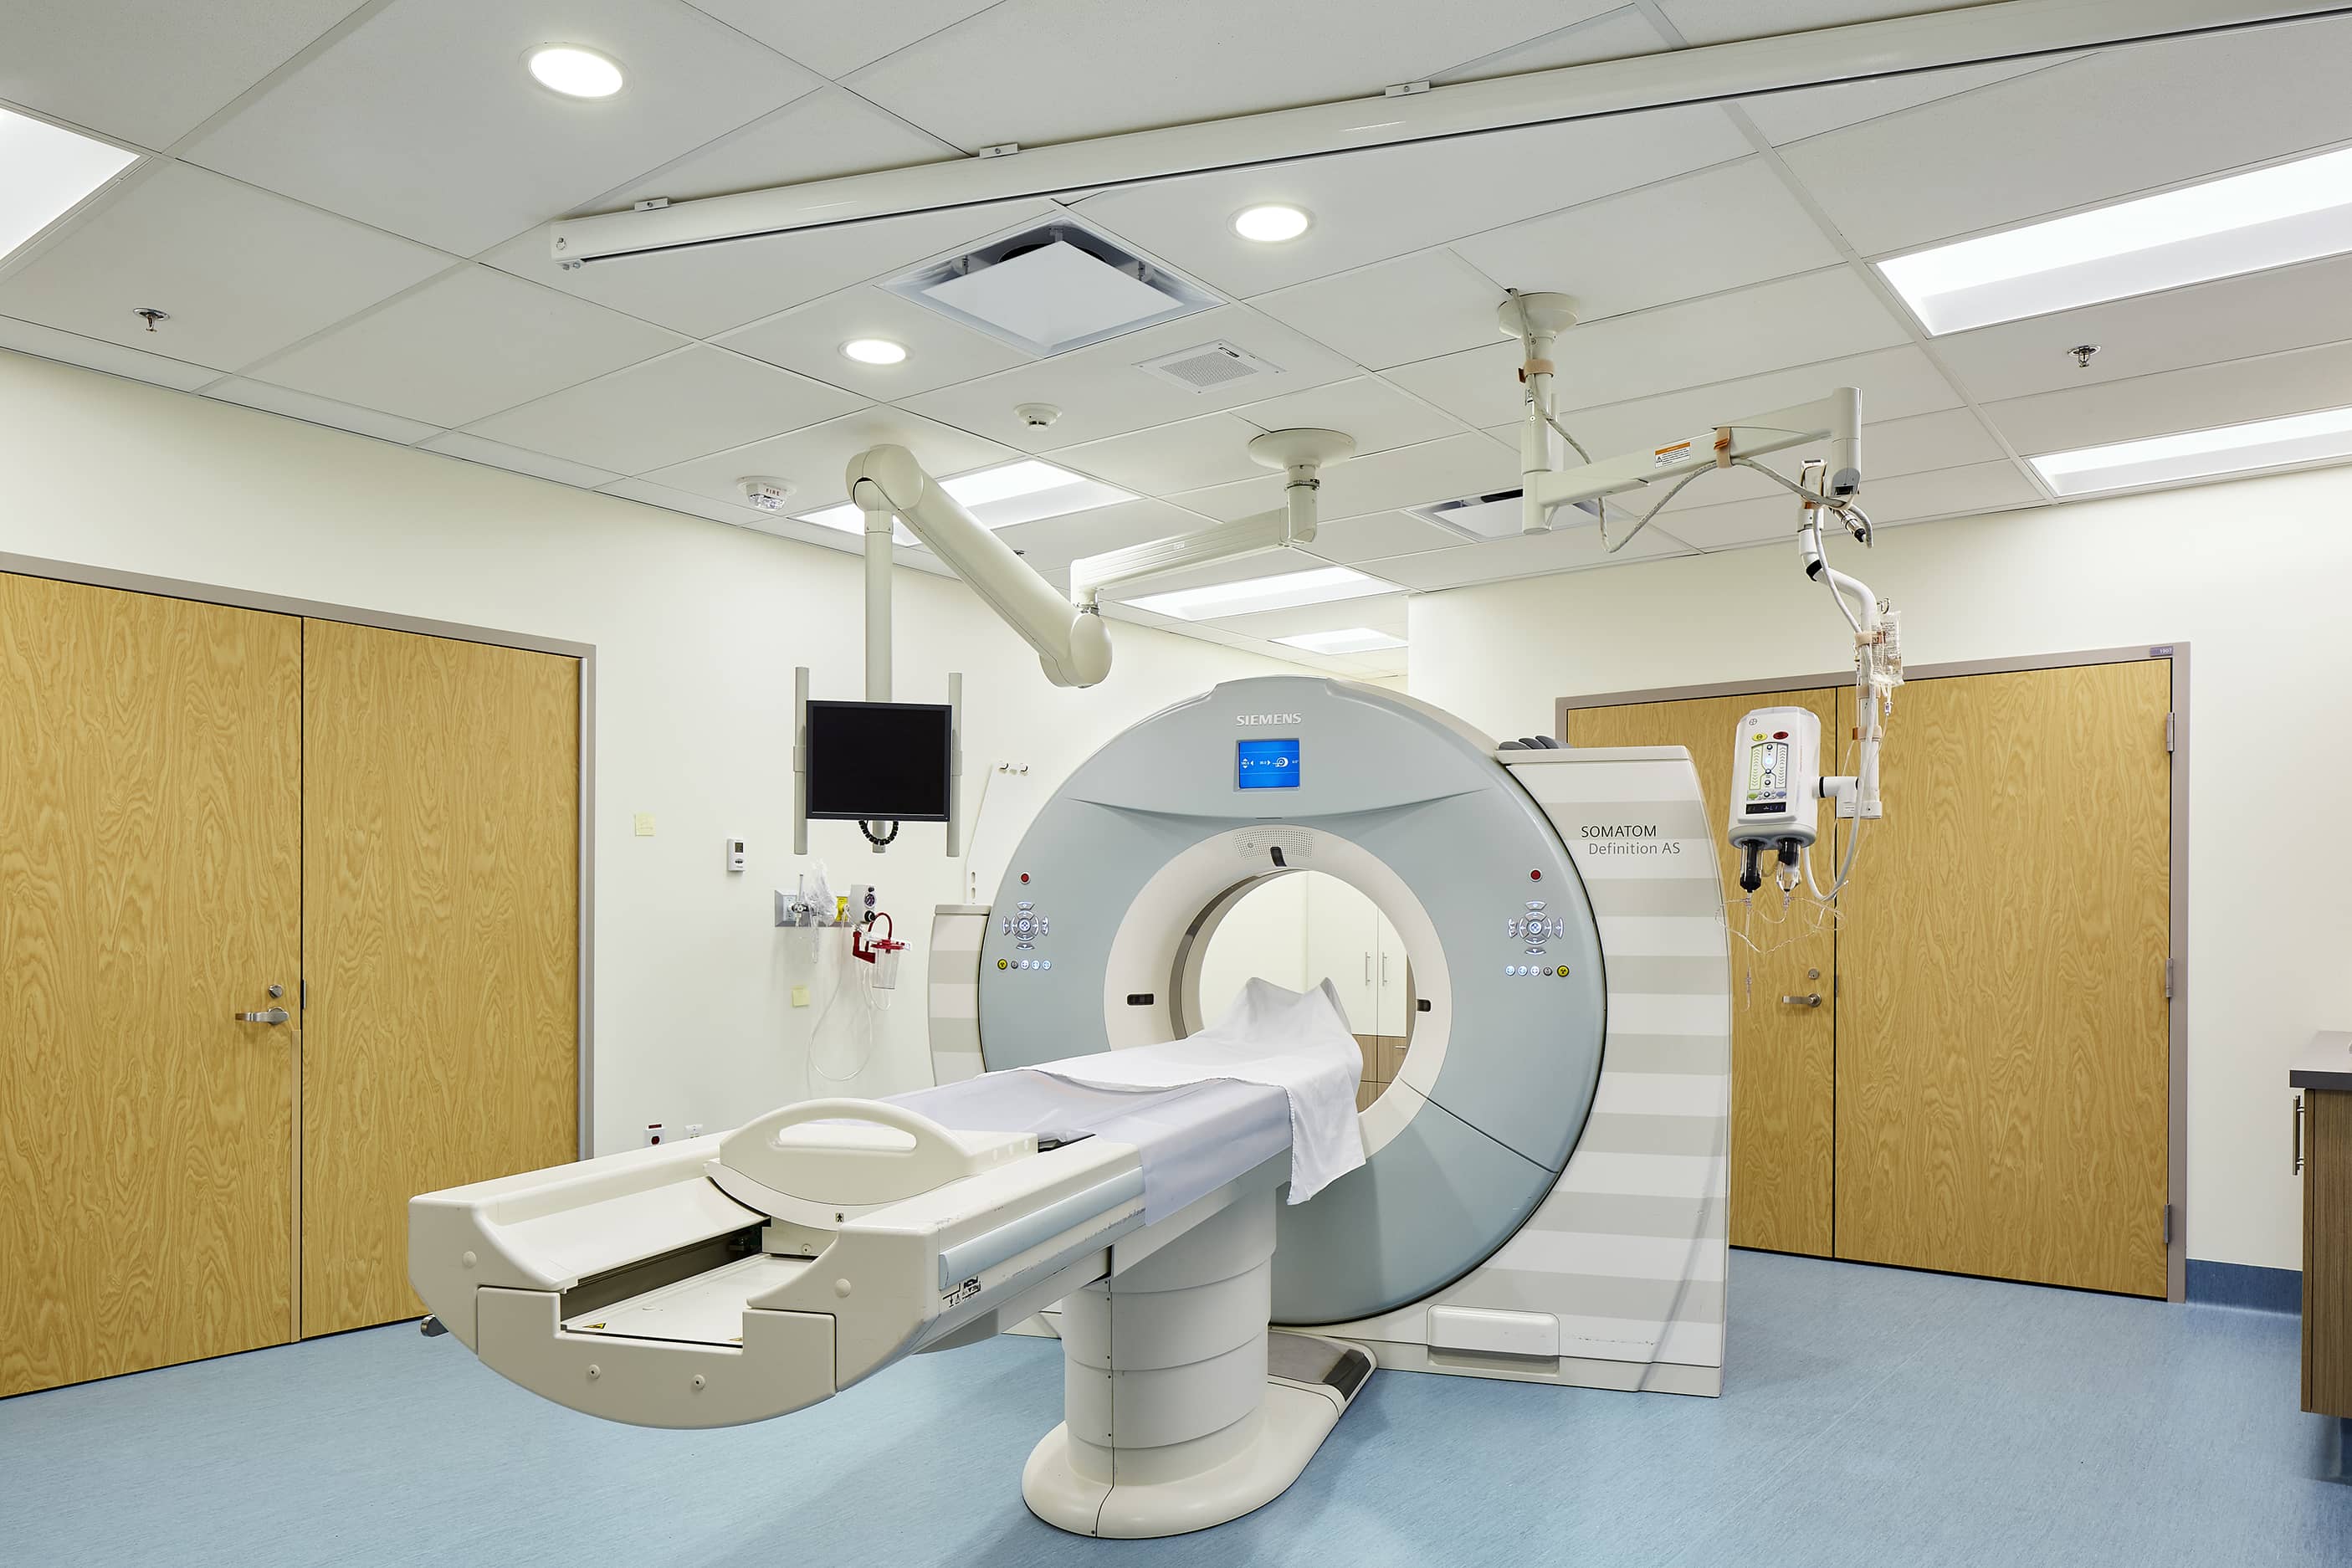 bbp whitehorse general hospital emergency department expansion radiology